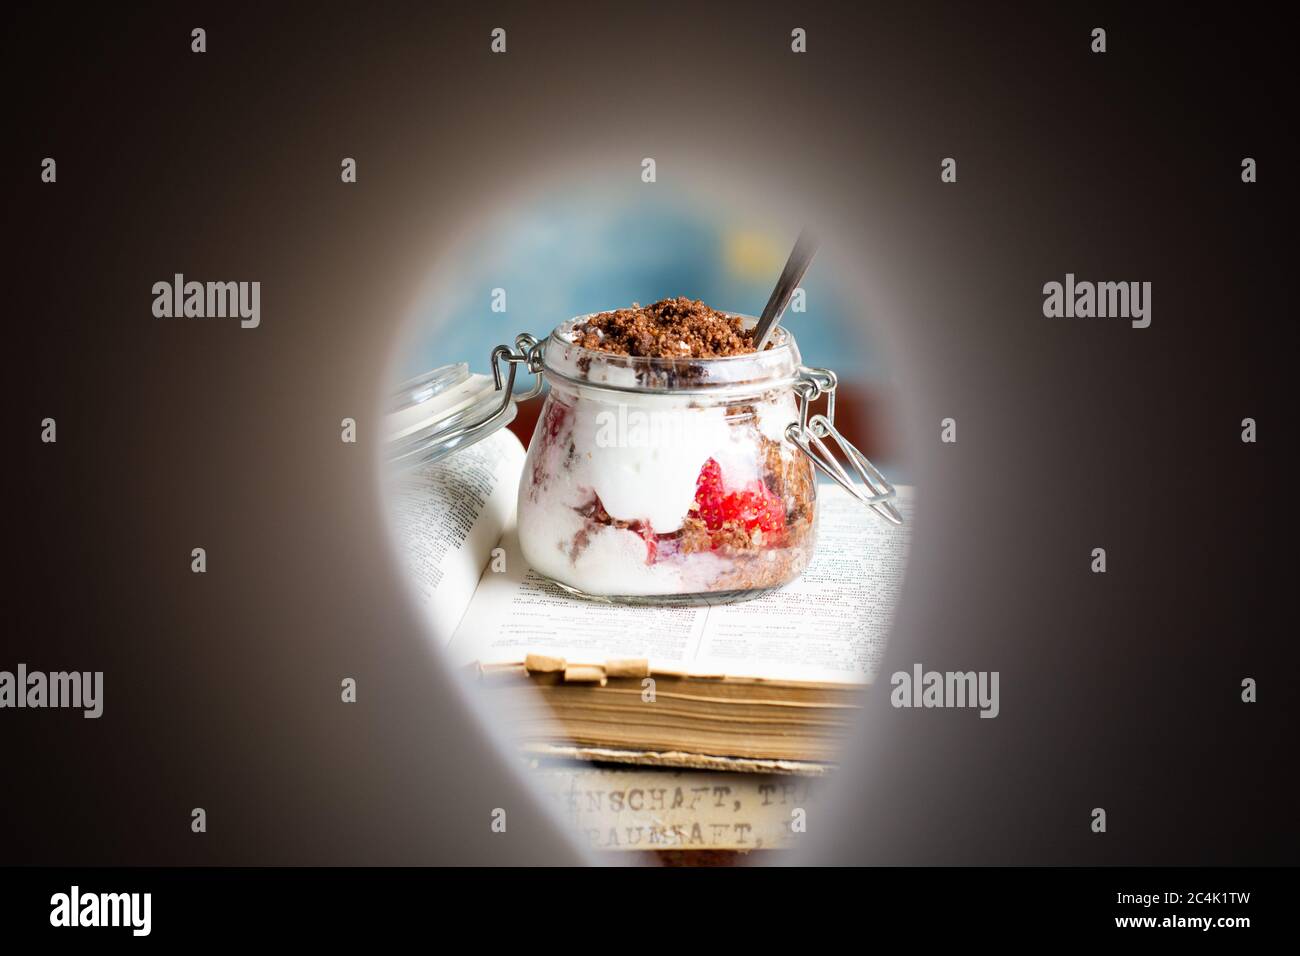 Strawberry parfait dessert in a glass jar on top of books closeup Stock Photo